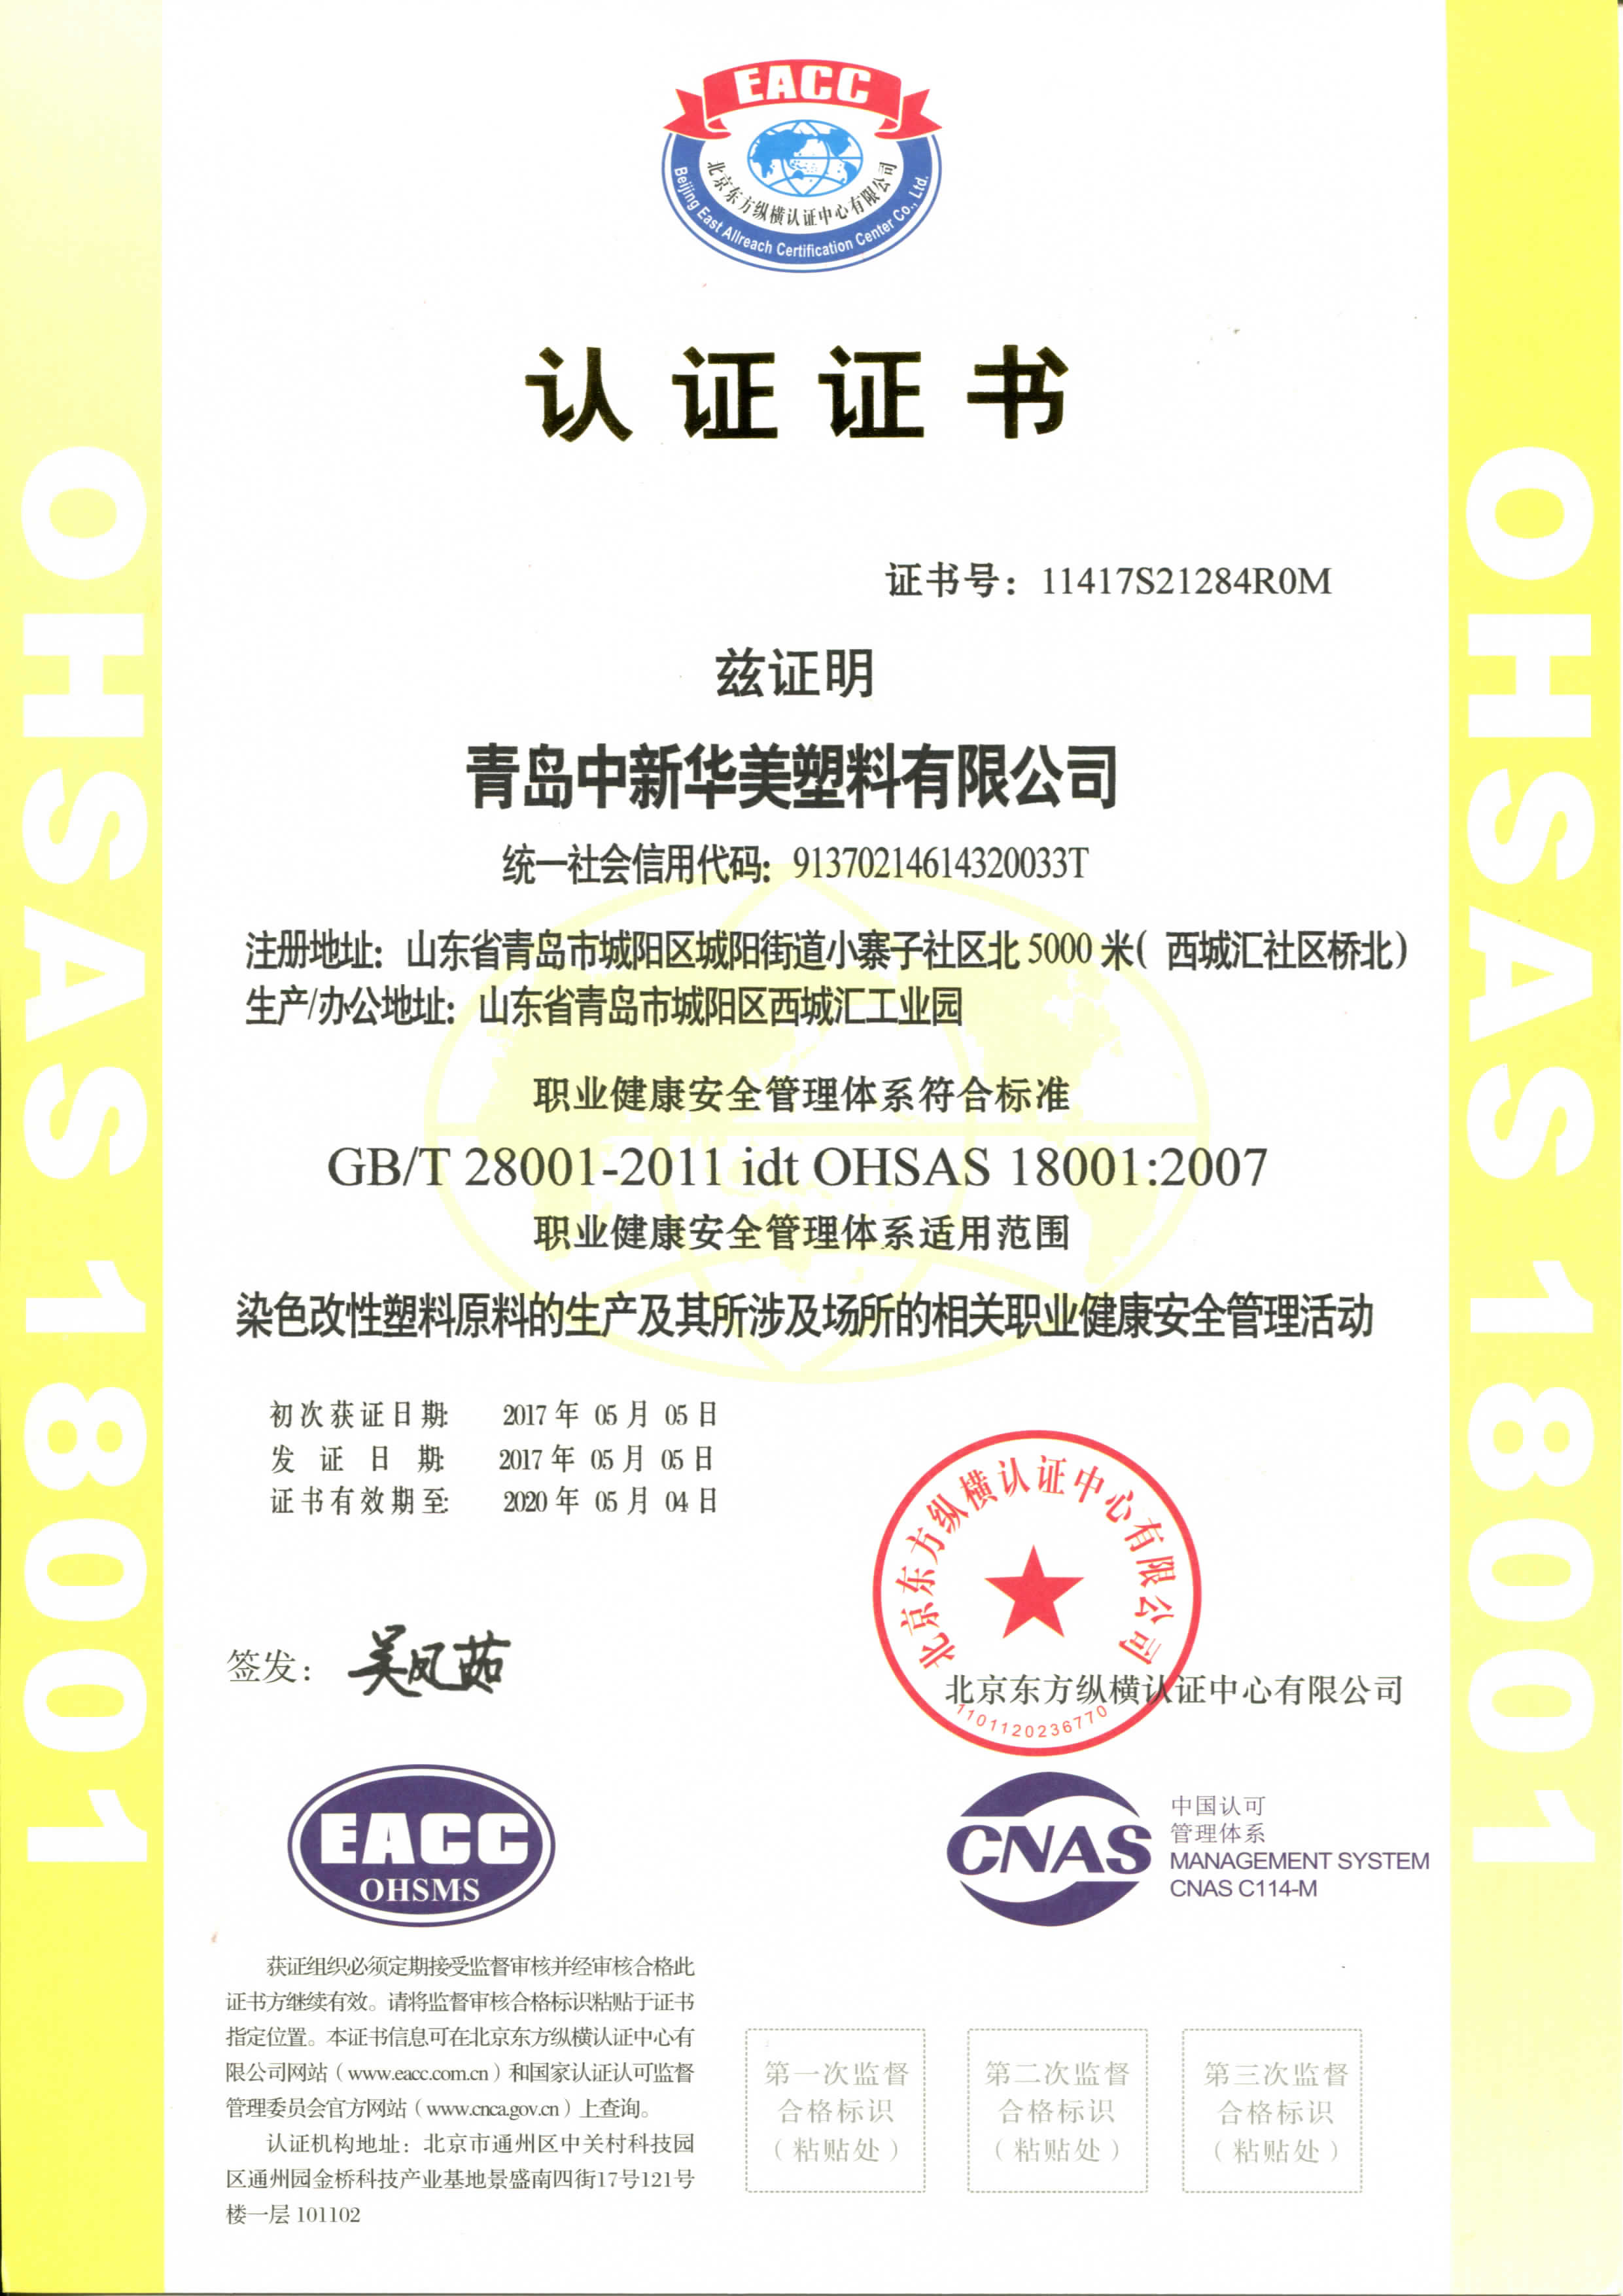 gb/t28001-2011 idt ohsas 18001:2007 职业健康认证